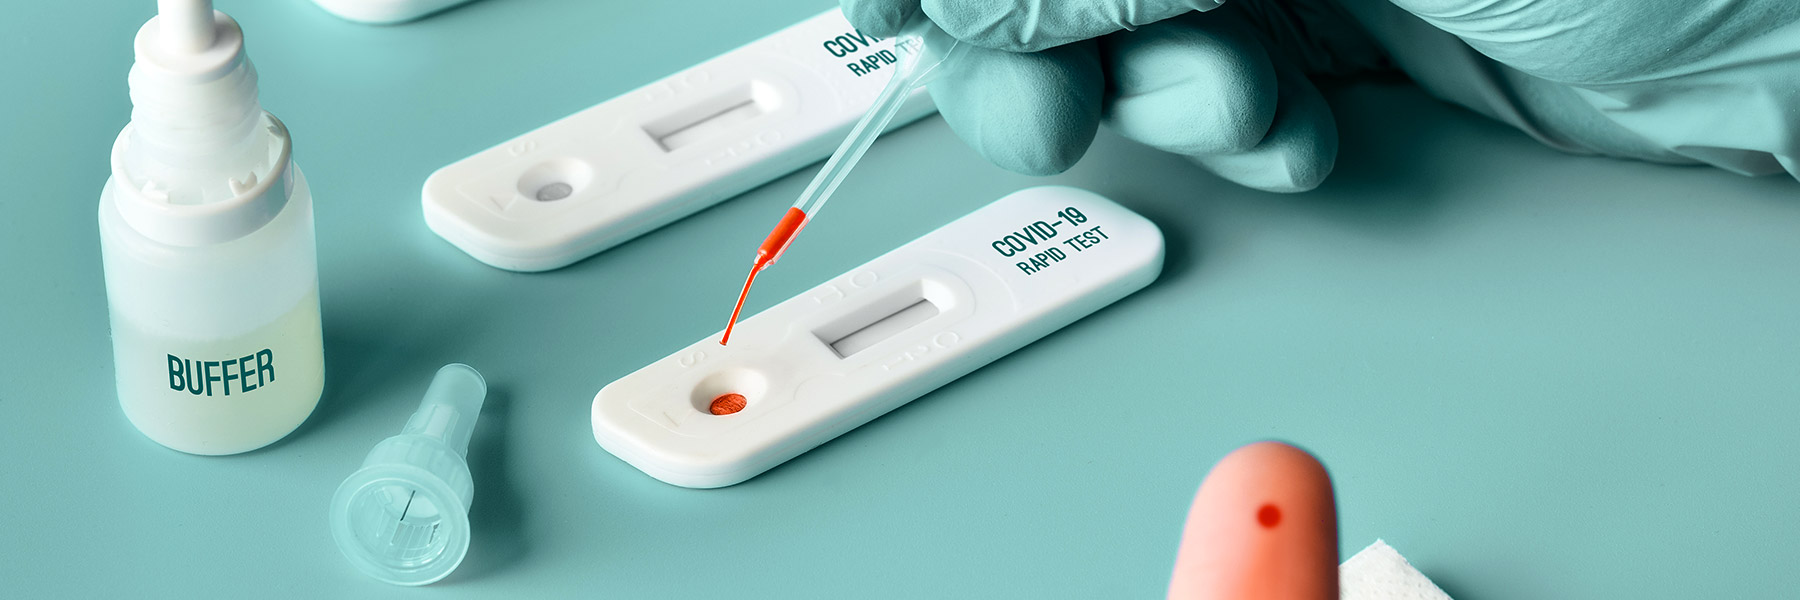 bg-prodotti Drug Test e Test Antidroga per il lavoro